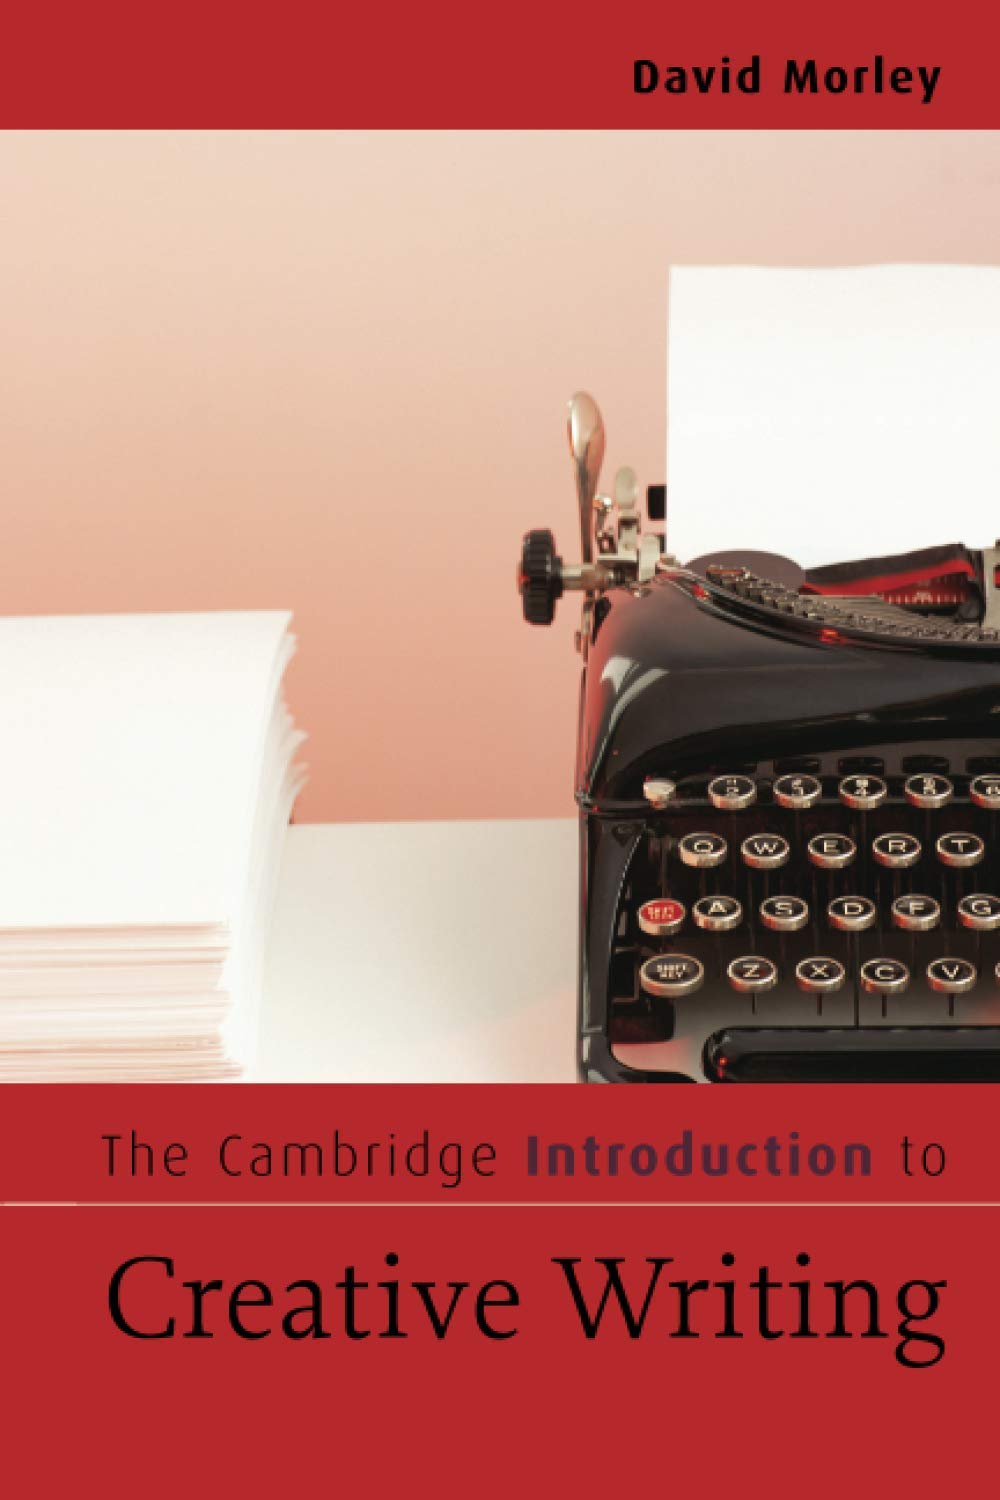 creative writing course cambridge uk